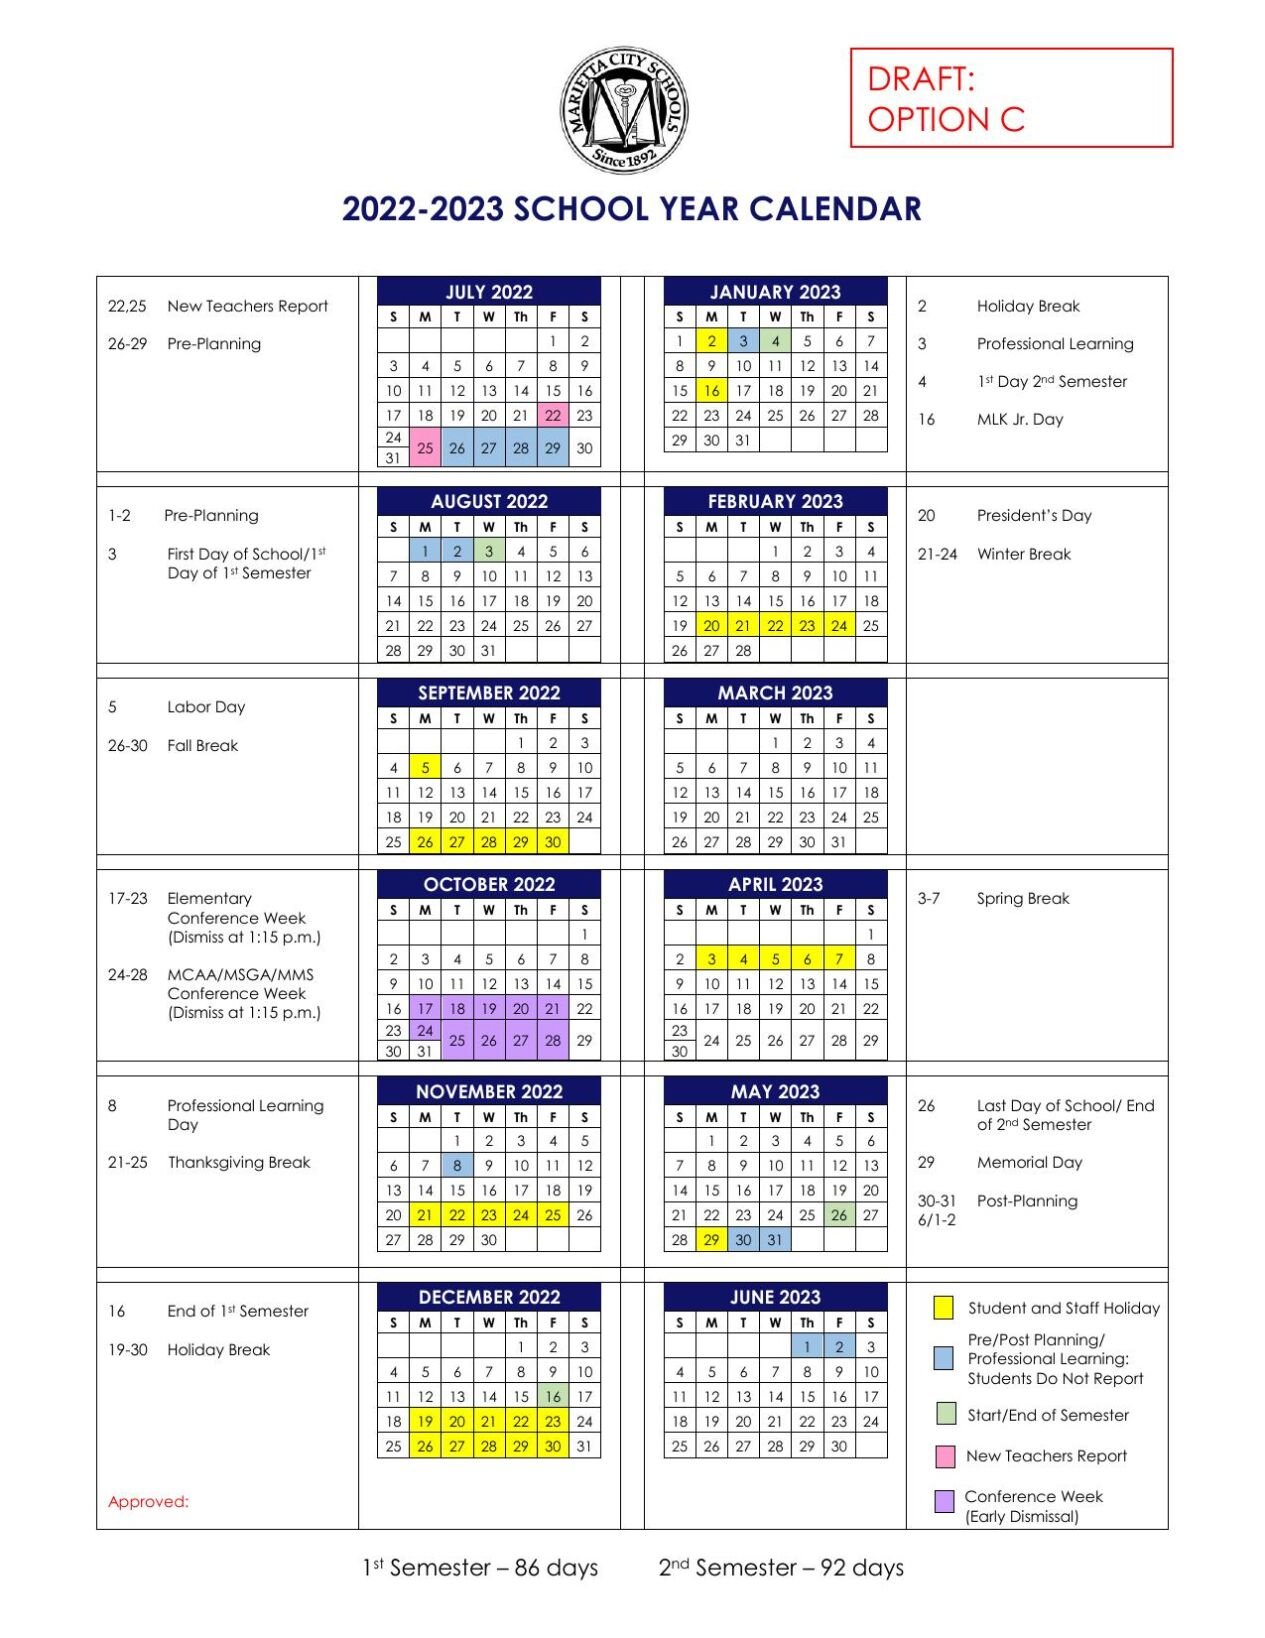 Ohio University Calendar 2022 23 2022-23 Marietta Schools Calendar Option C | | Mdjonline.com